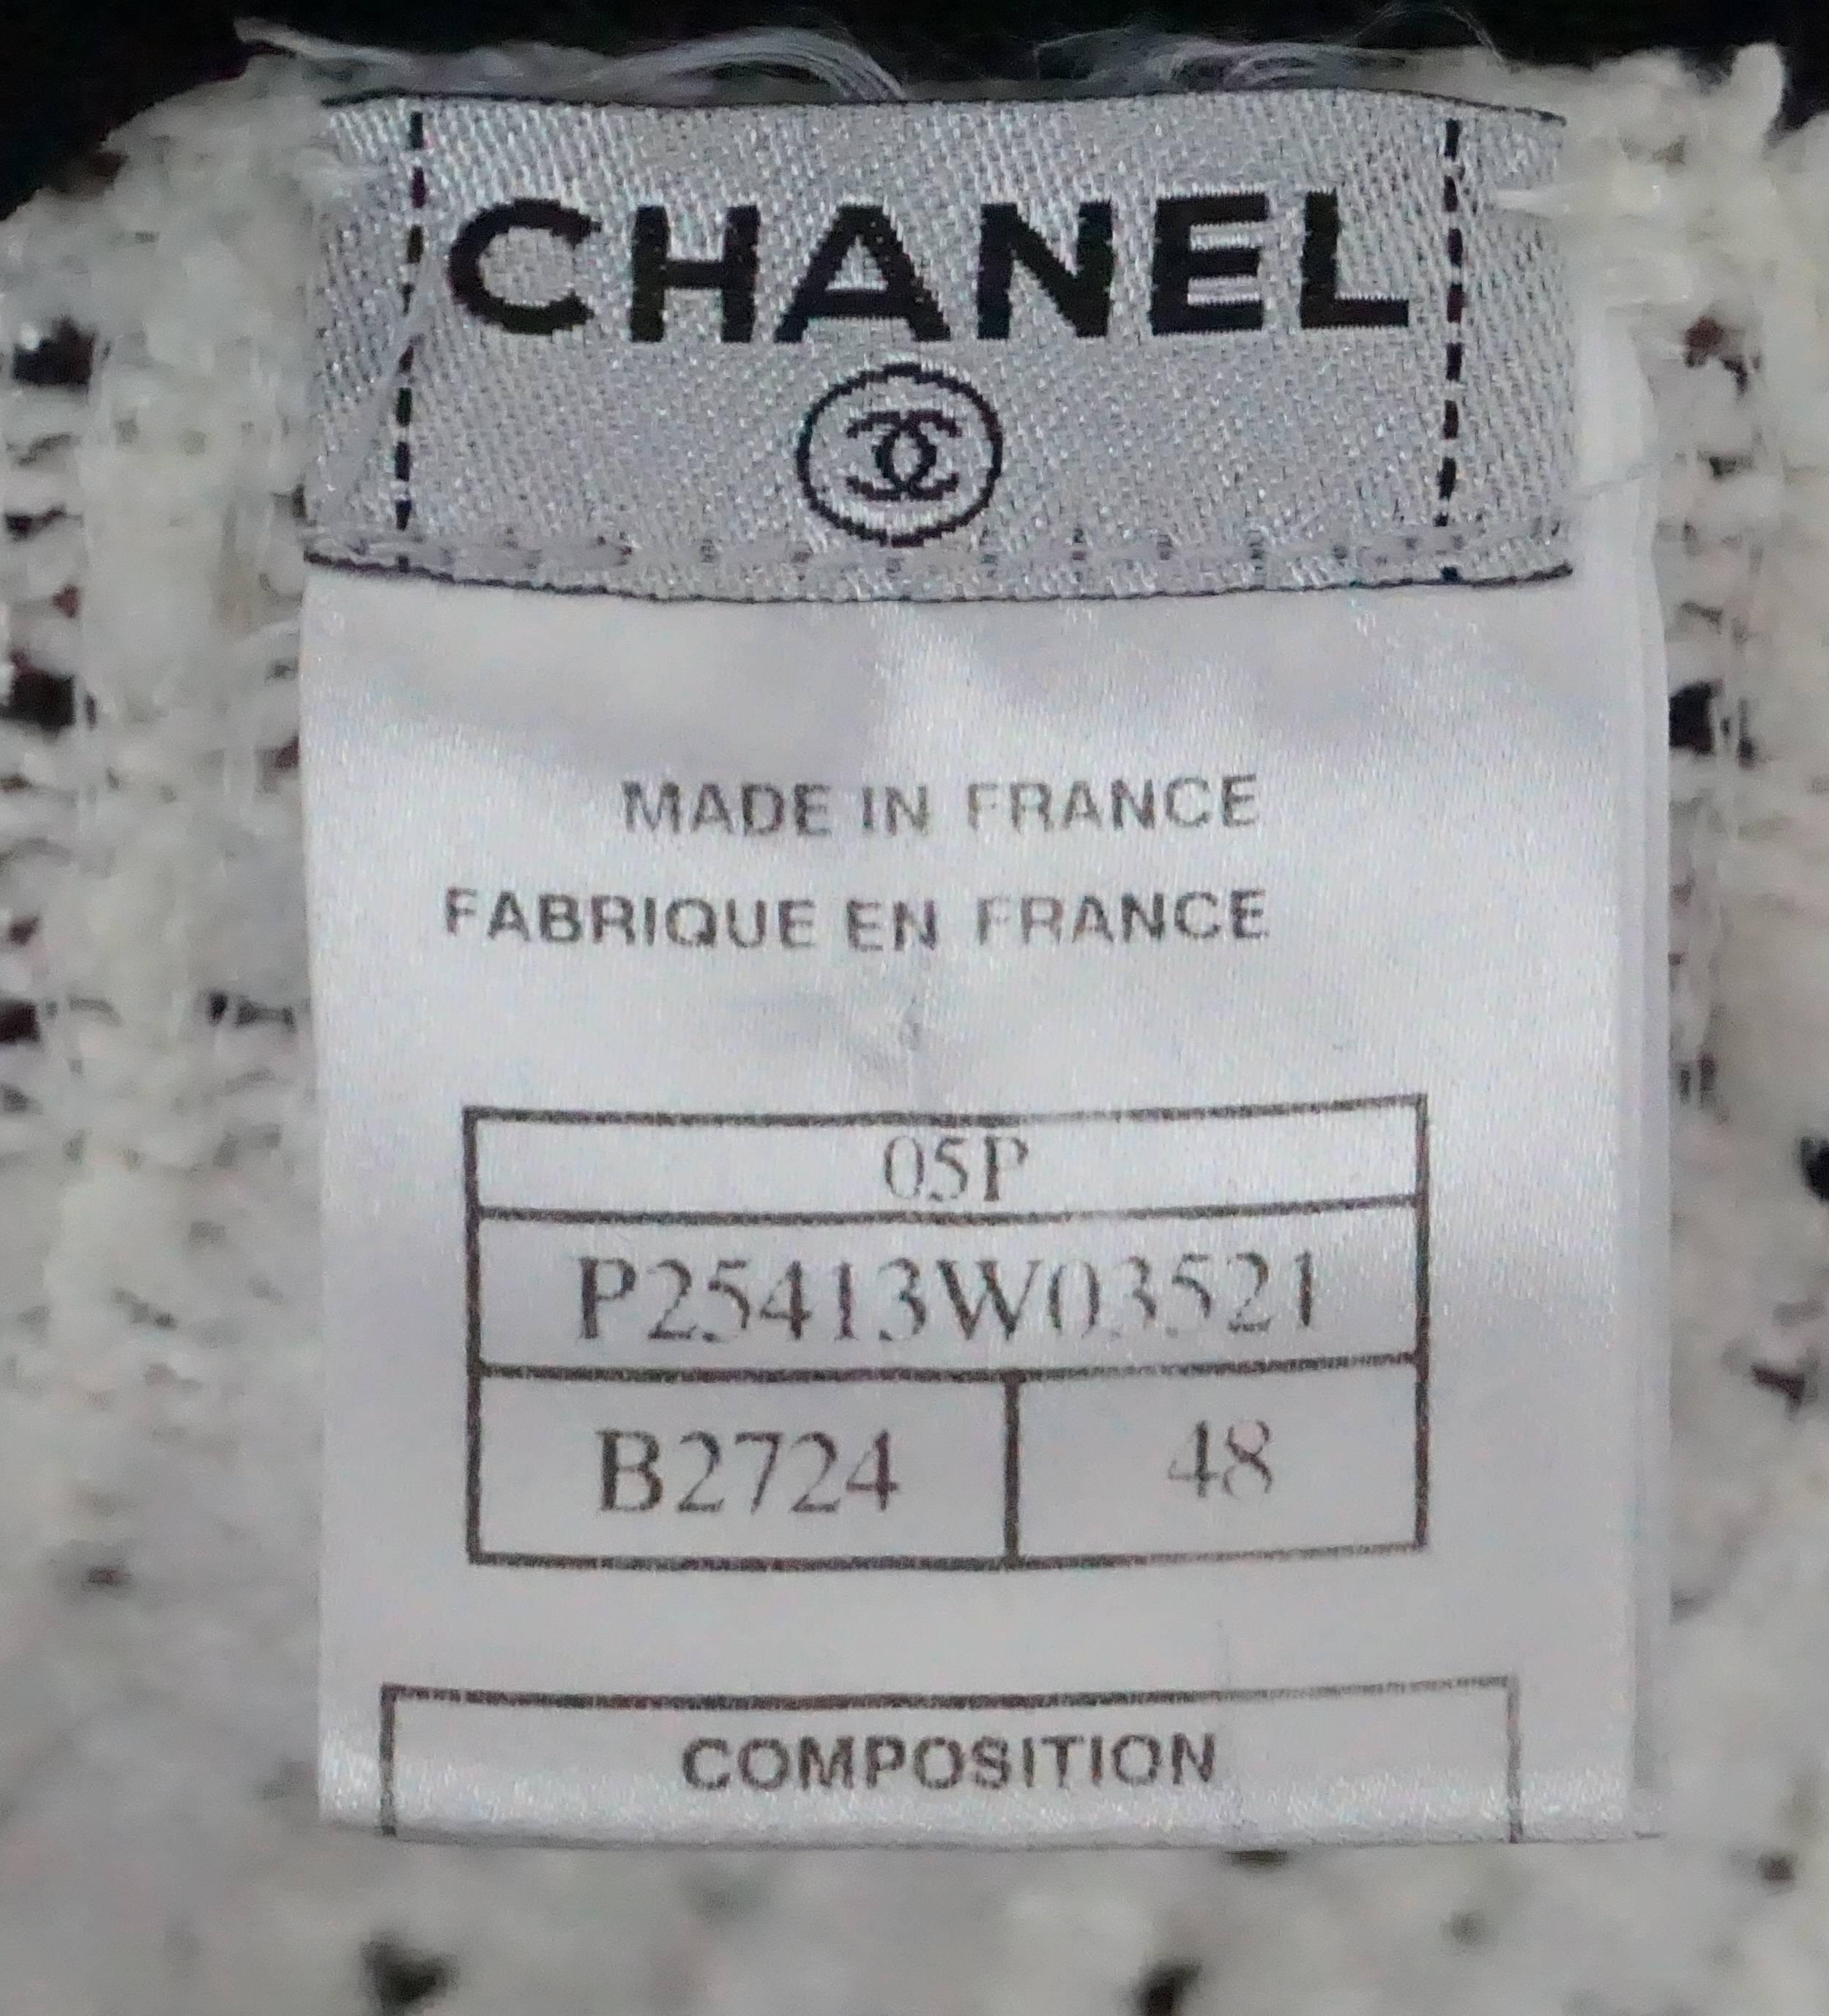 Chanel Ivory and Black Silk/Cotton Knit Lesage Long Vest/ Duster - 48 - 05P 1